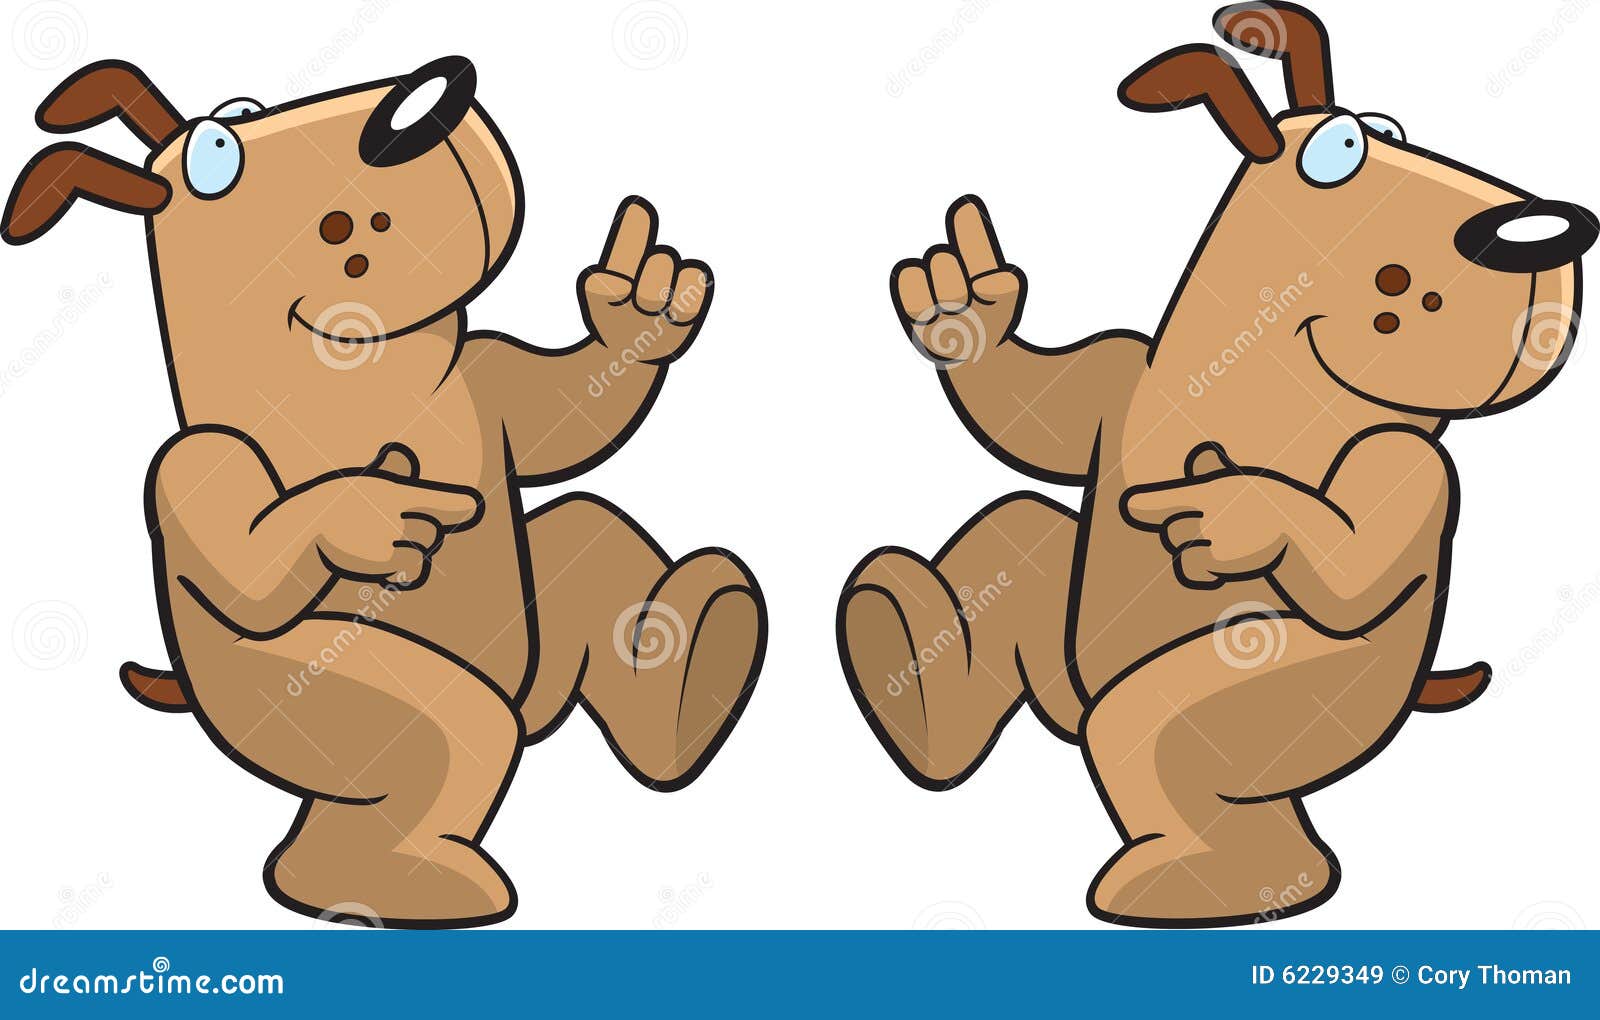 Dancing Dog stock vector. Illustration of brown, happy - 6229349